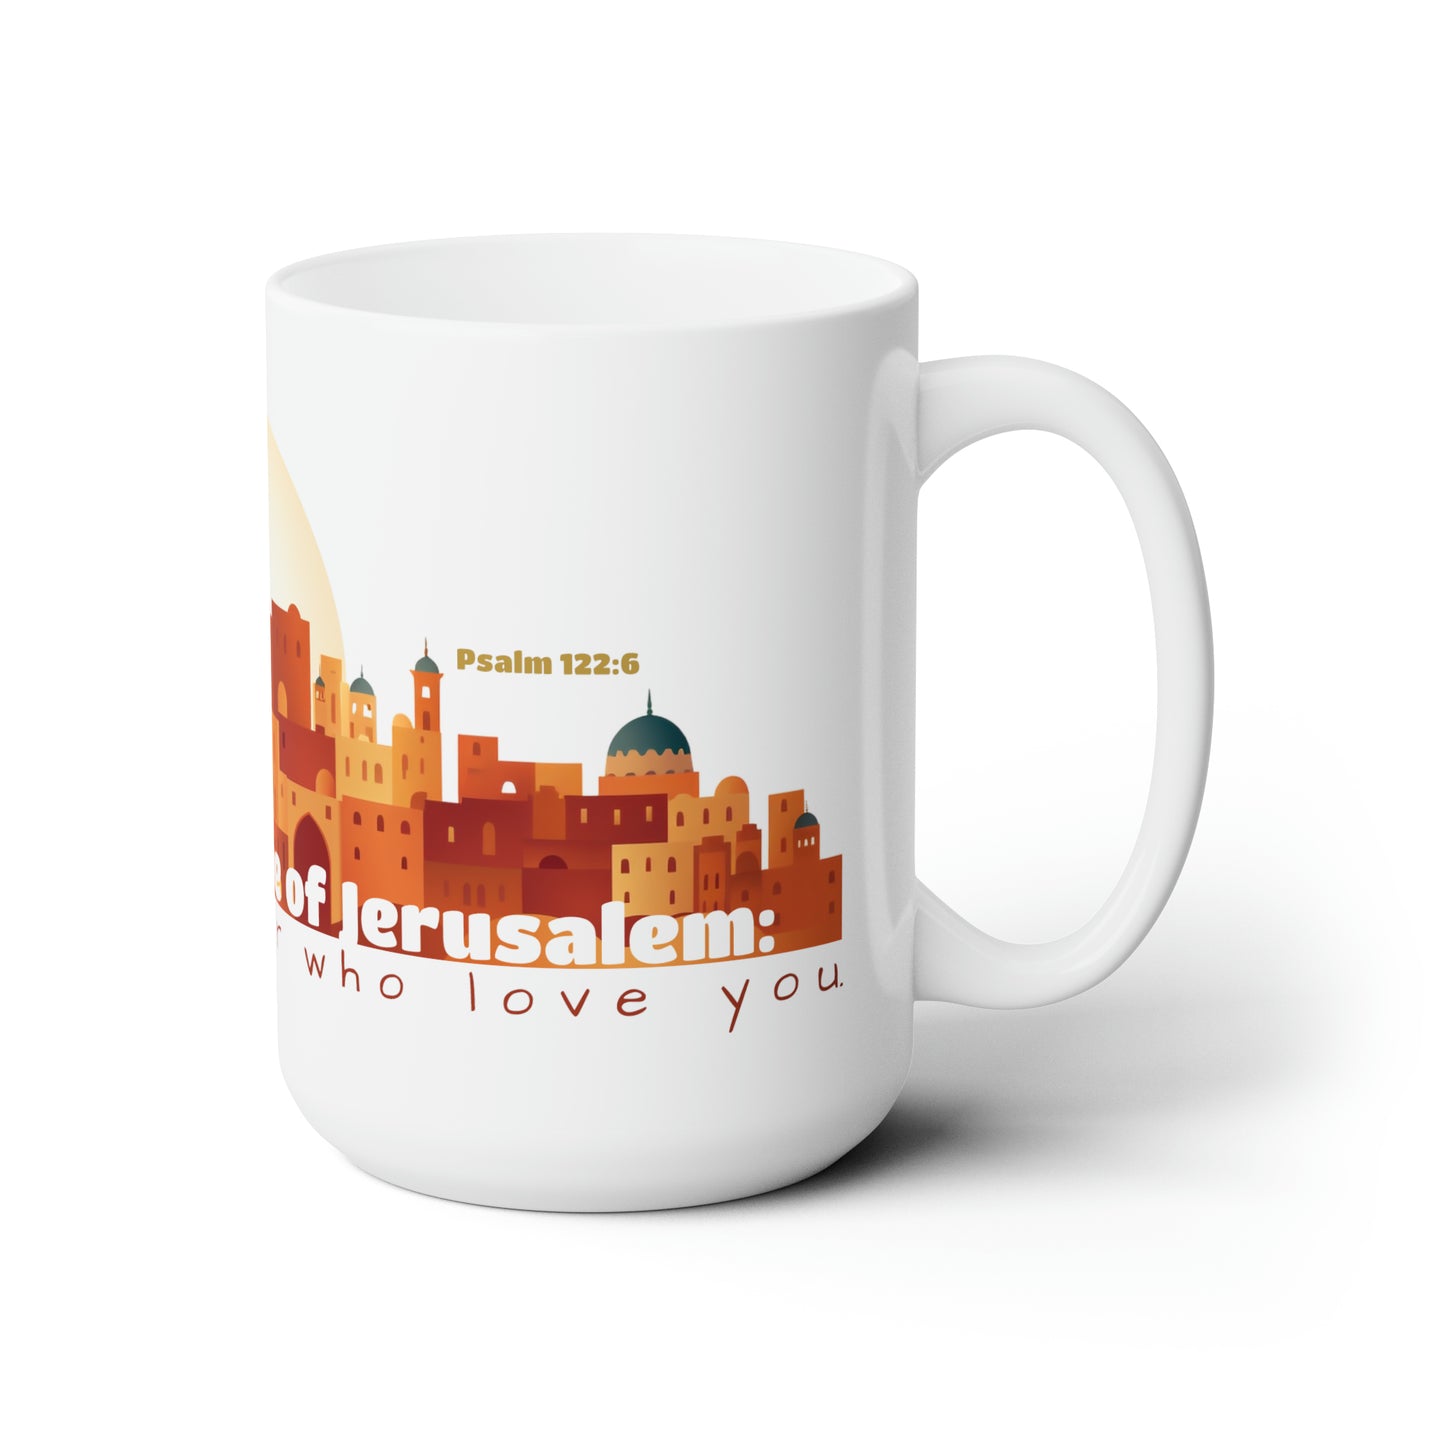 Pray for the peace of Jerusalem / white mug 15 oz